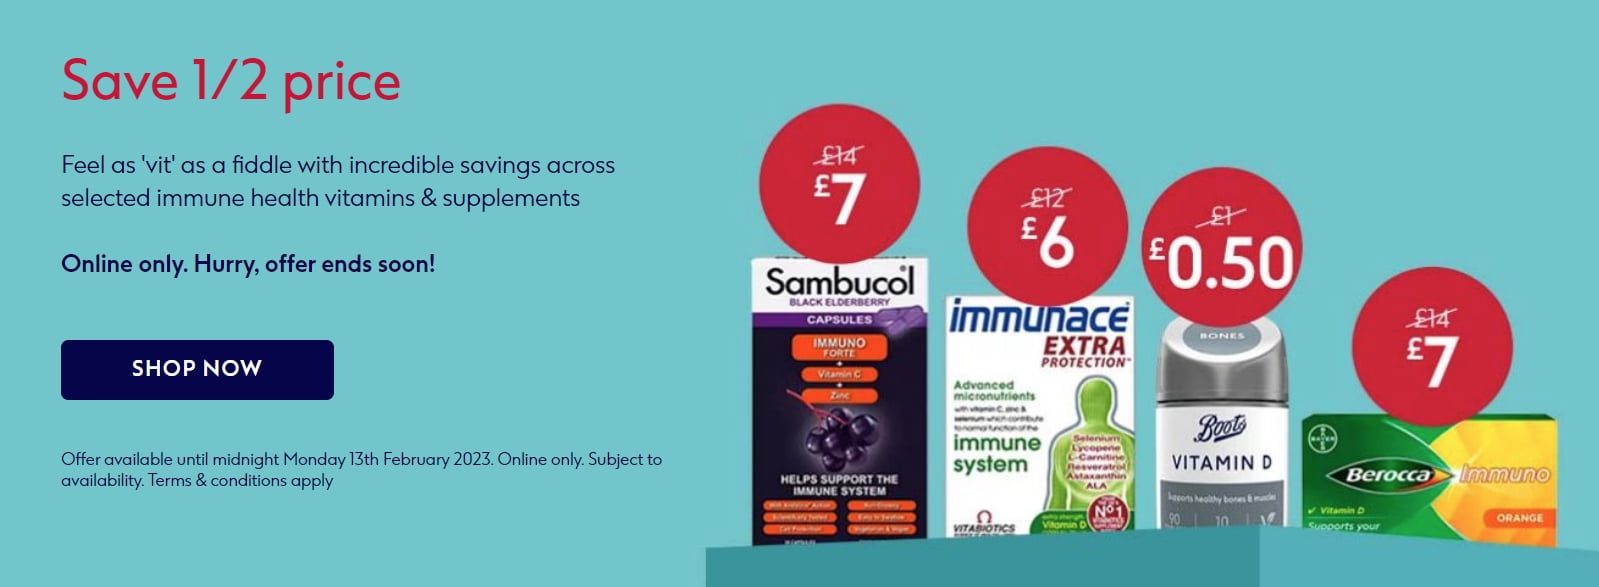 Save half price on selected immunity vitamins